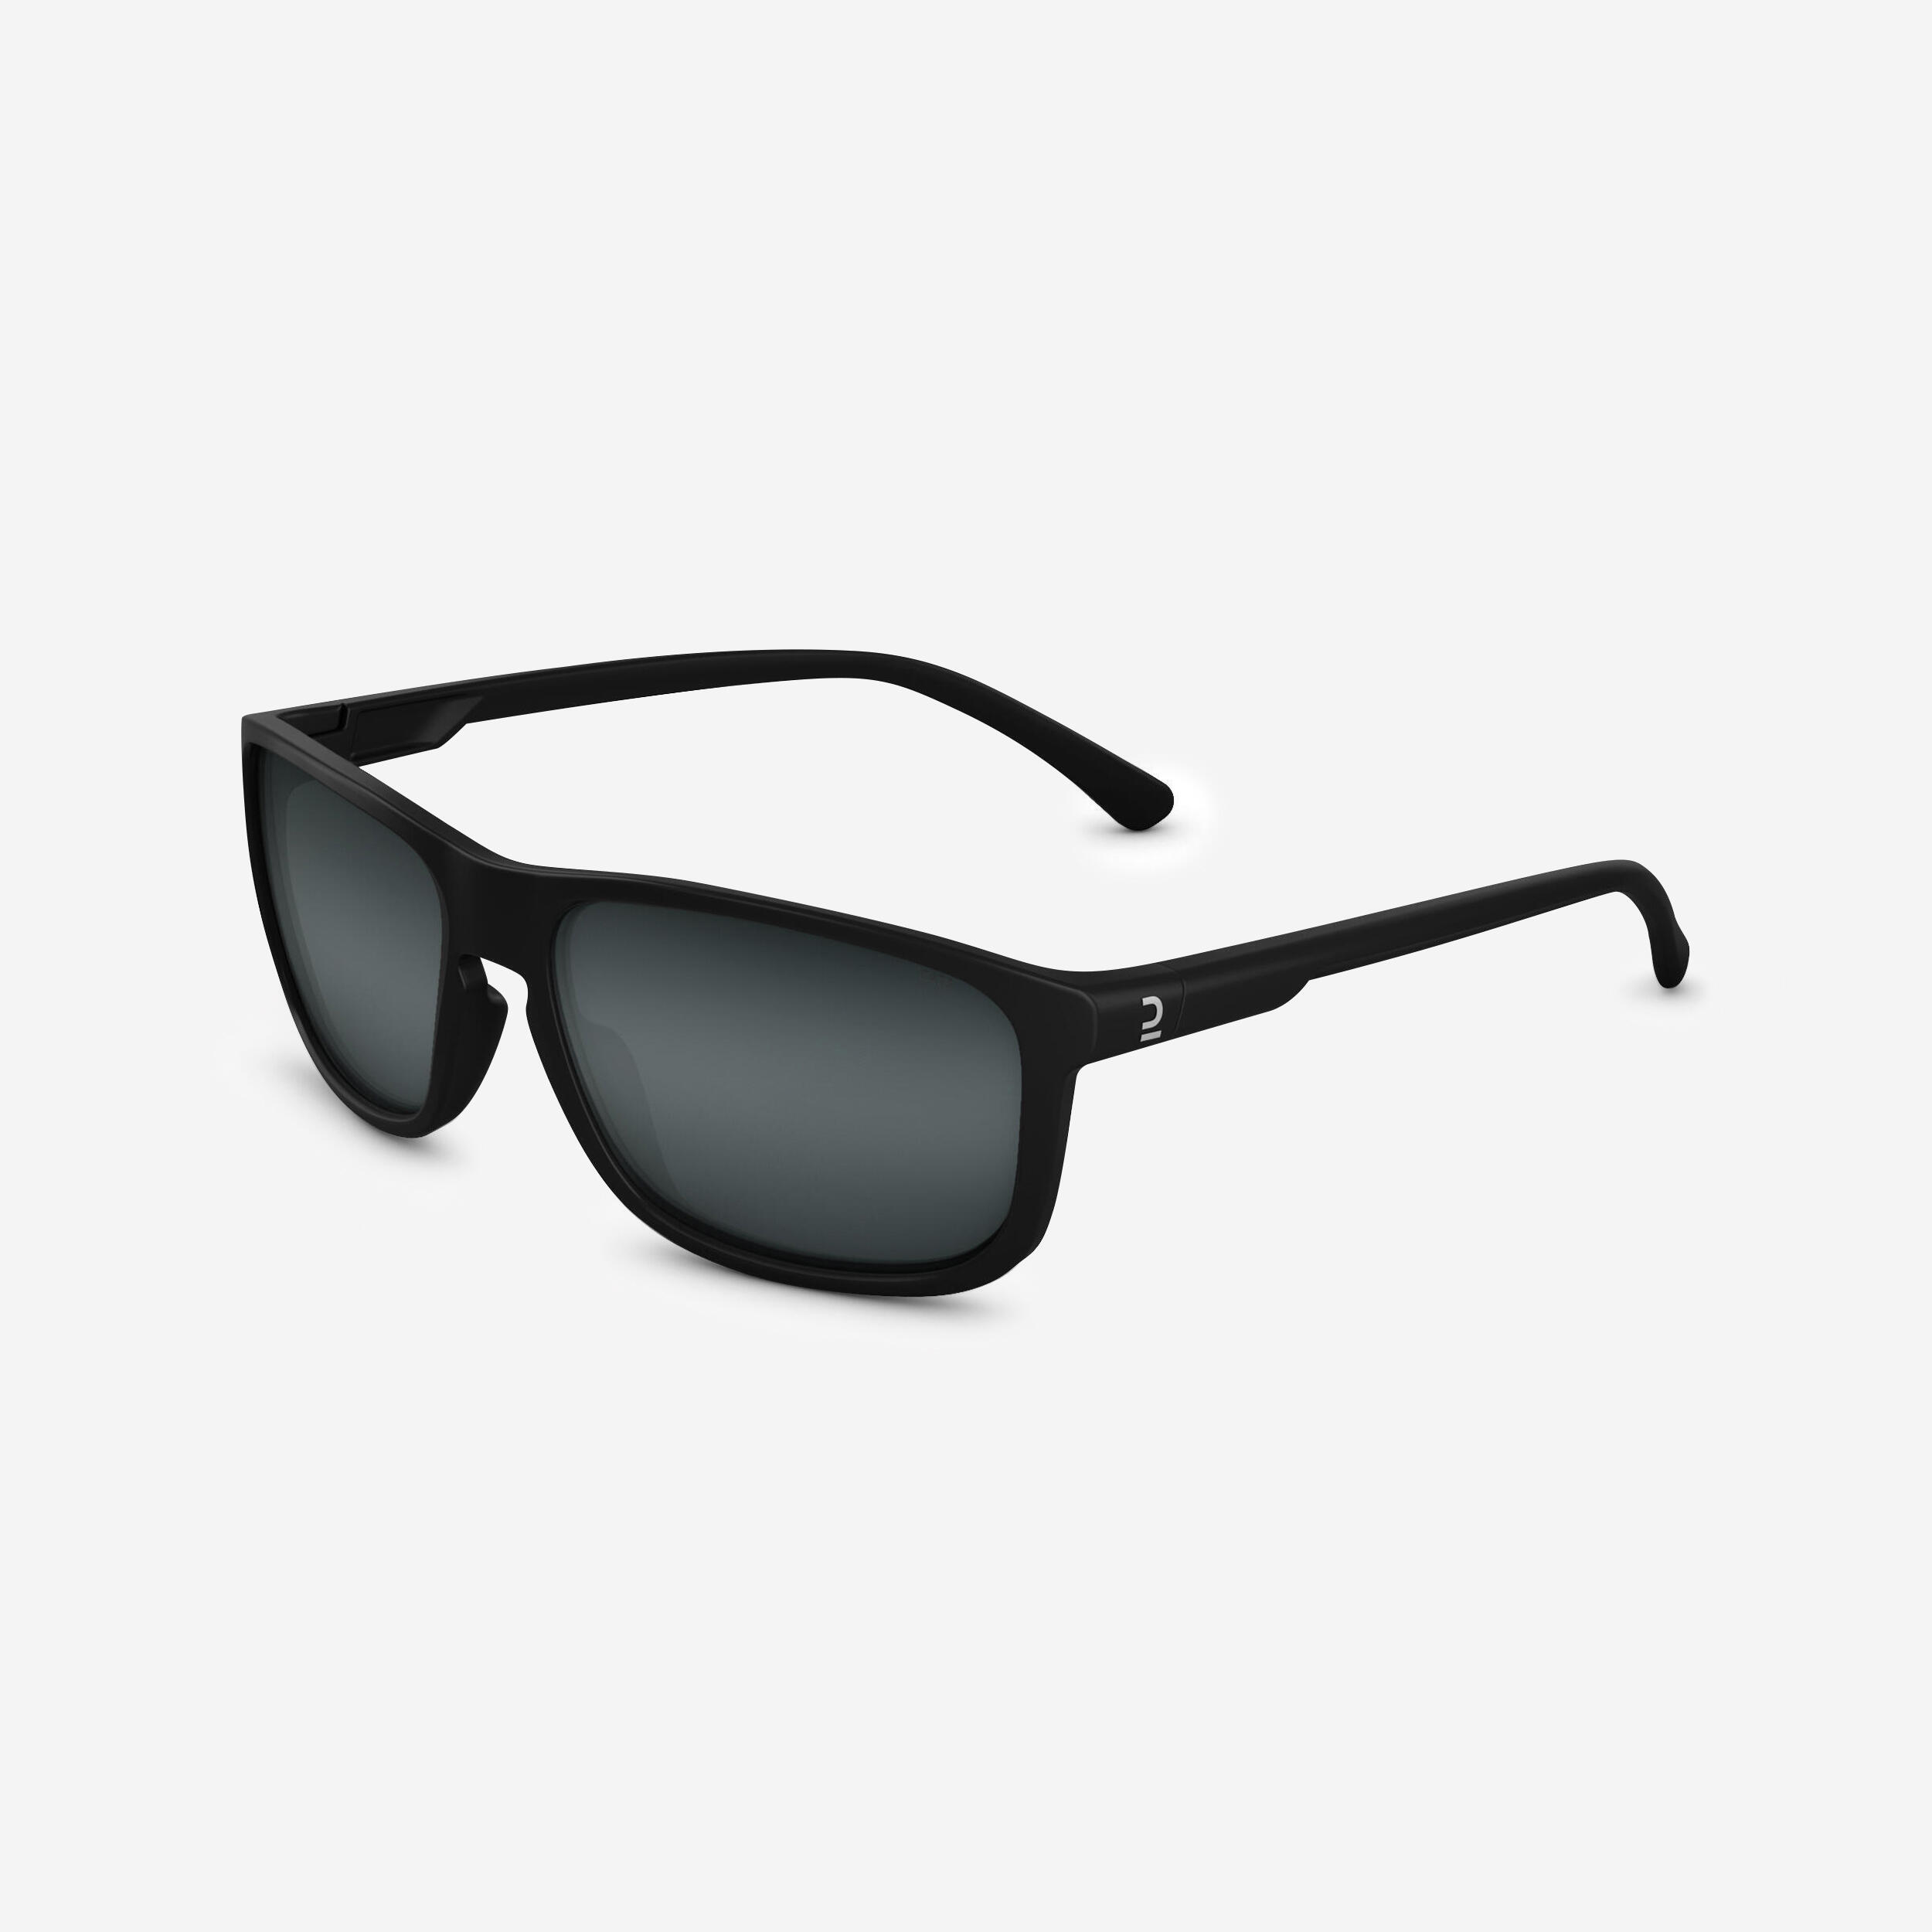 Hiking Category 3 Sunglasses - MH 100